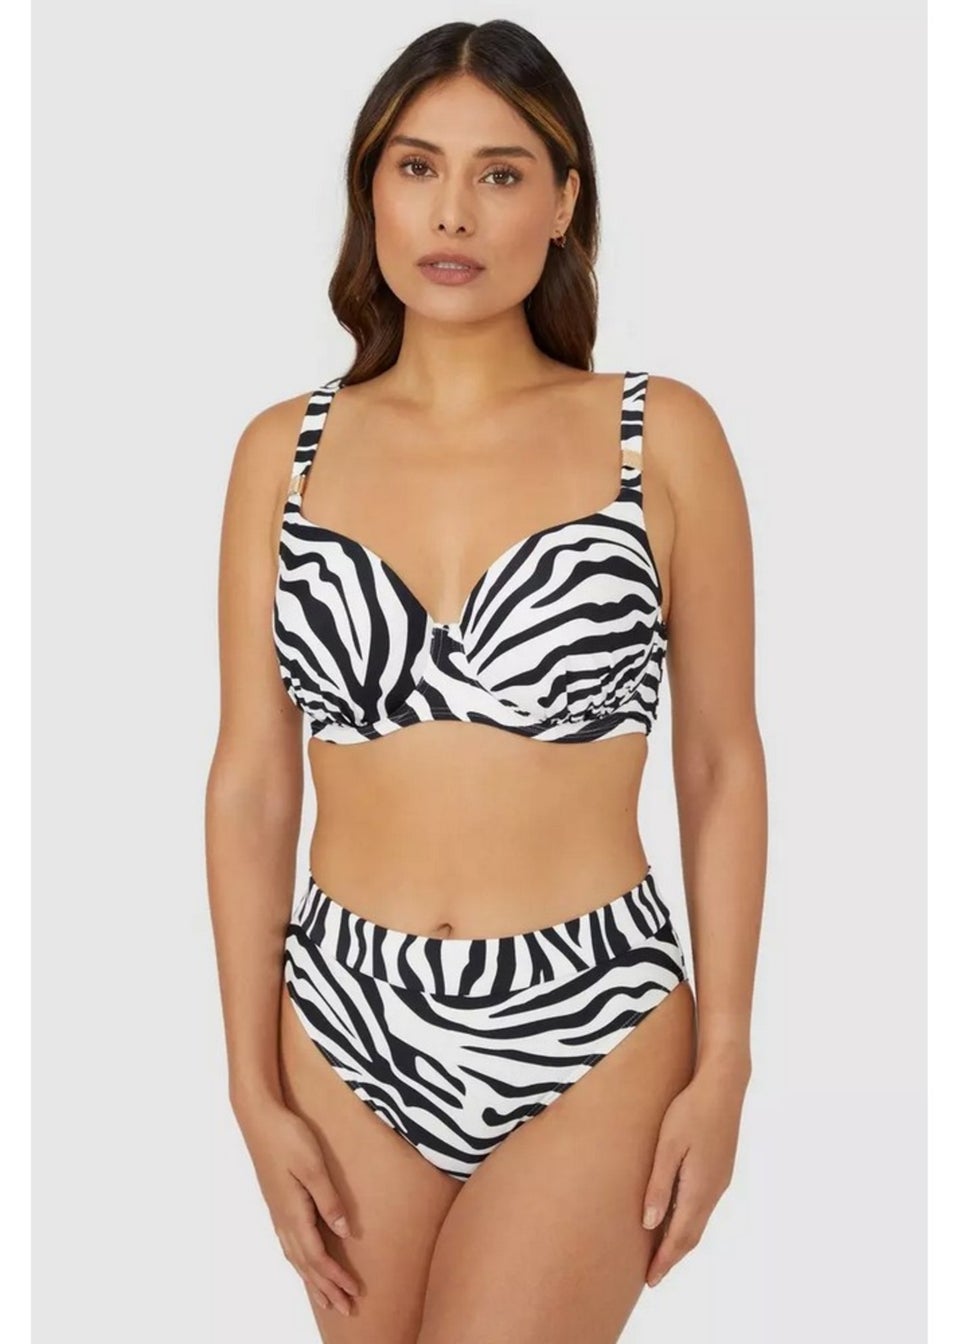 Gorgeous White/Black Zebra Print Mid Rise Bikini Bottoms